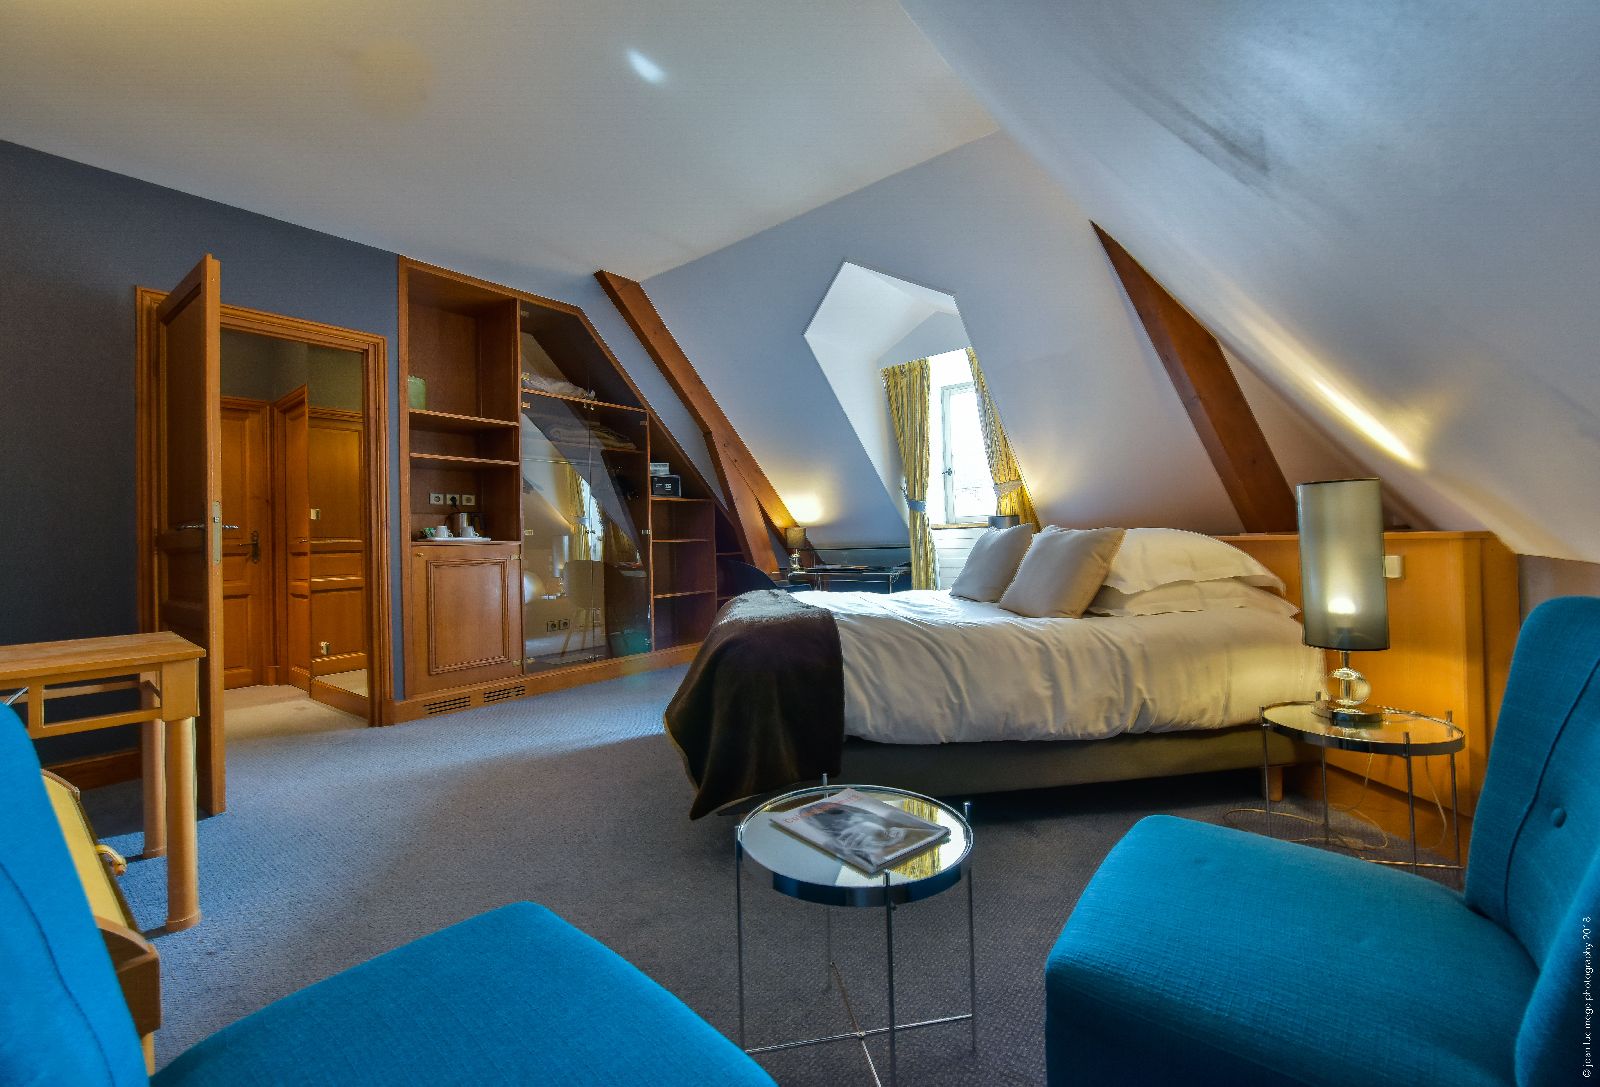 golf-expedition-golf-reis-Frankrijk-Bourgogne-Chateau-de-Chailly-slaapkamer-modern-kleurijk-ruimtelijhk.jpg